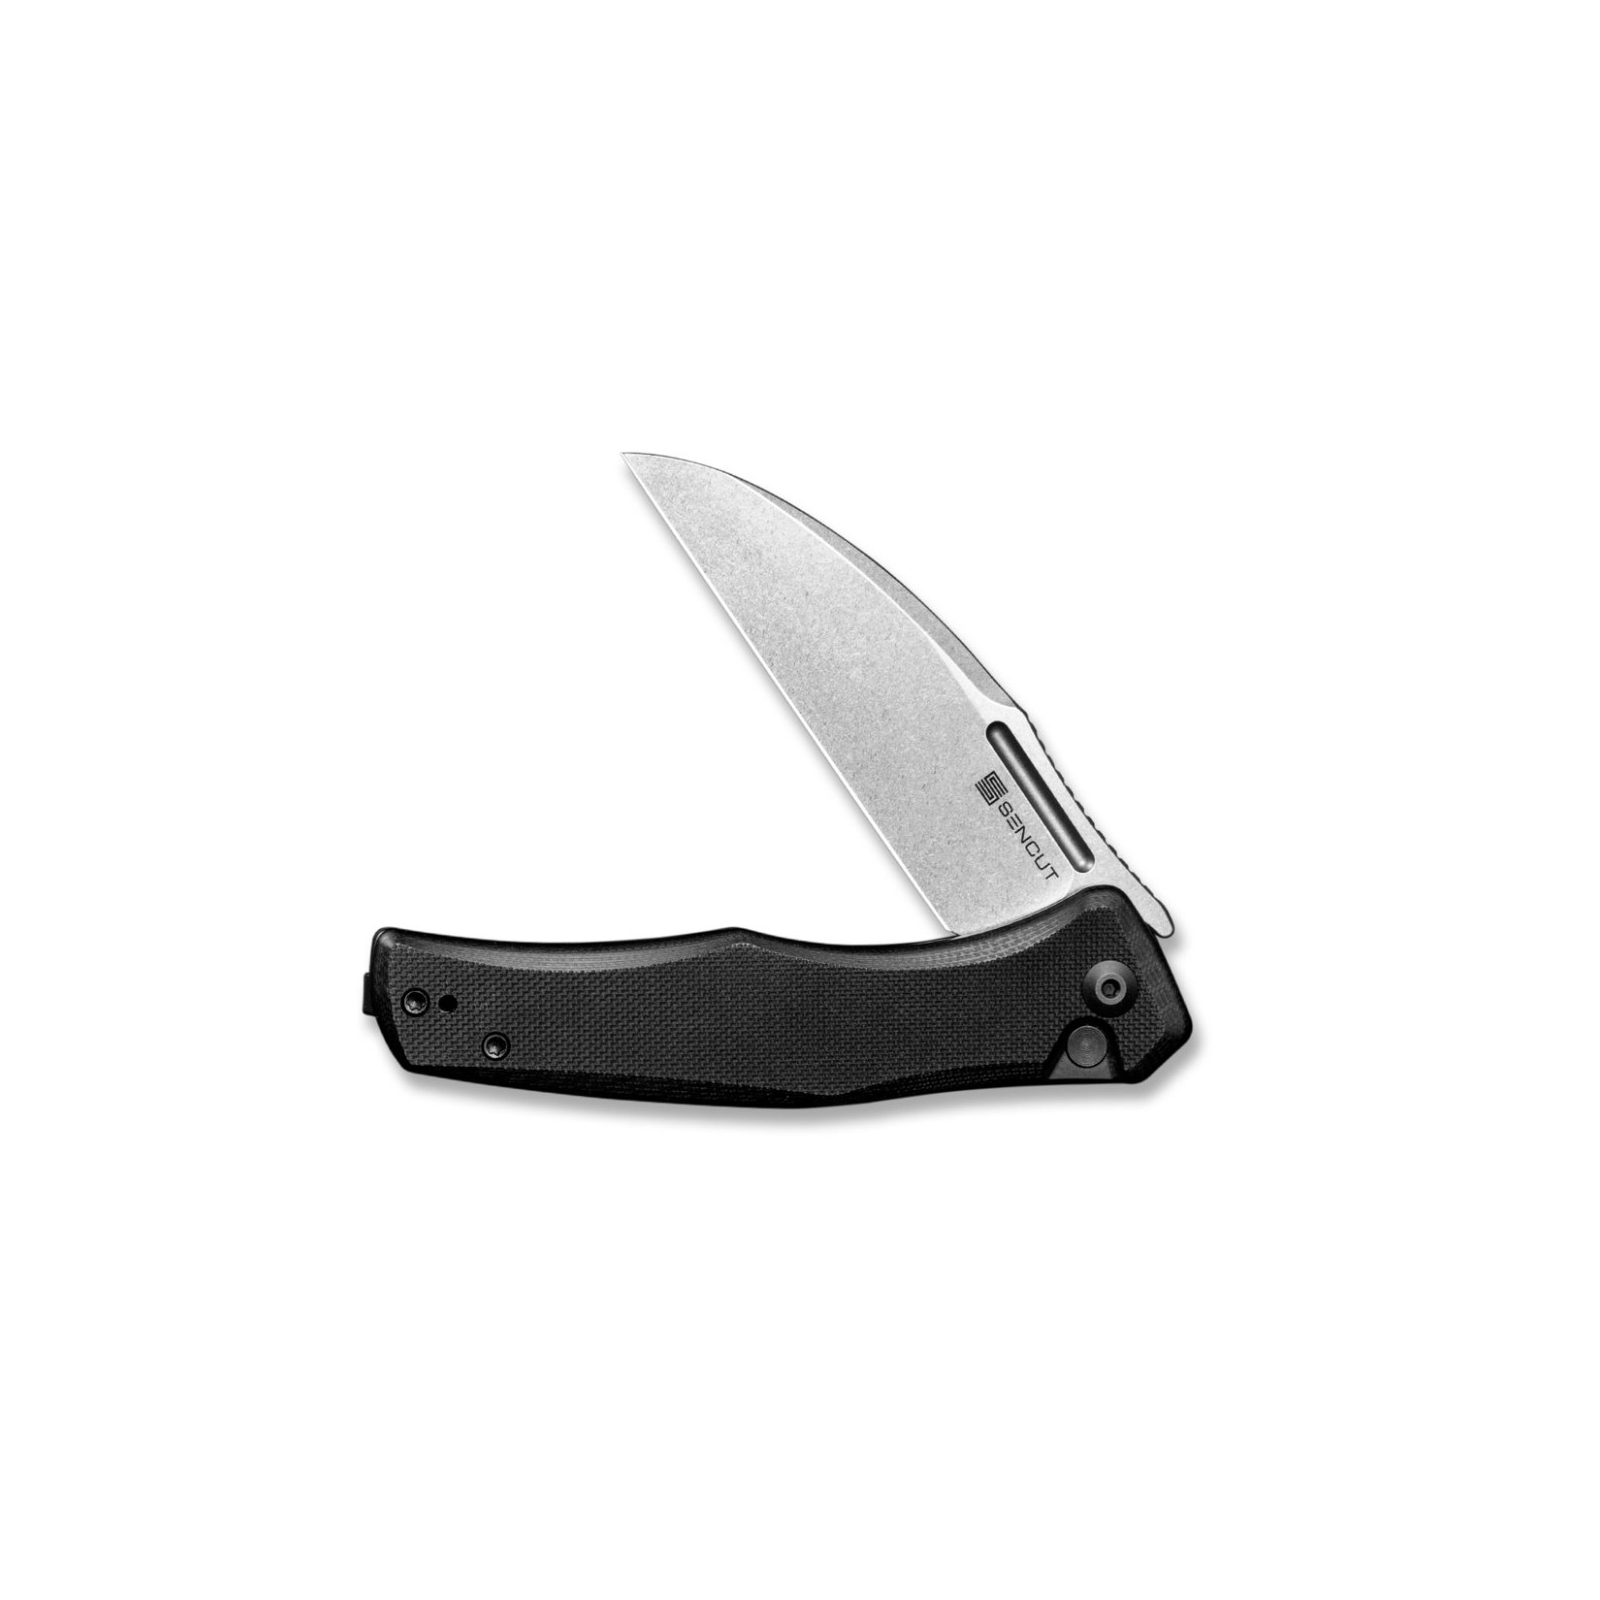 Нож Sencut Watauga Blackwash Green Micarta (S21011-2) изображение 4